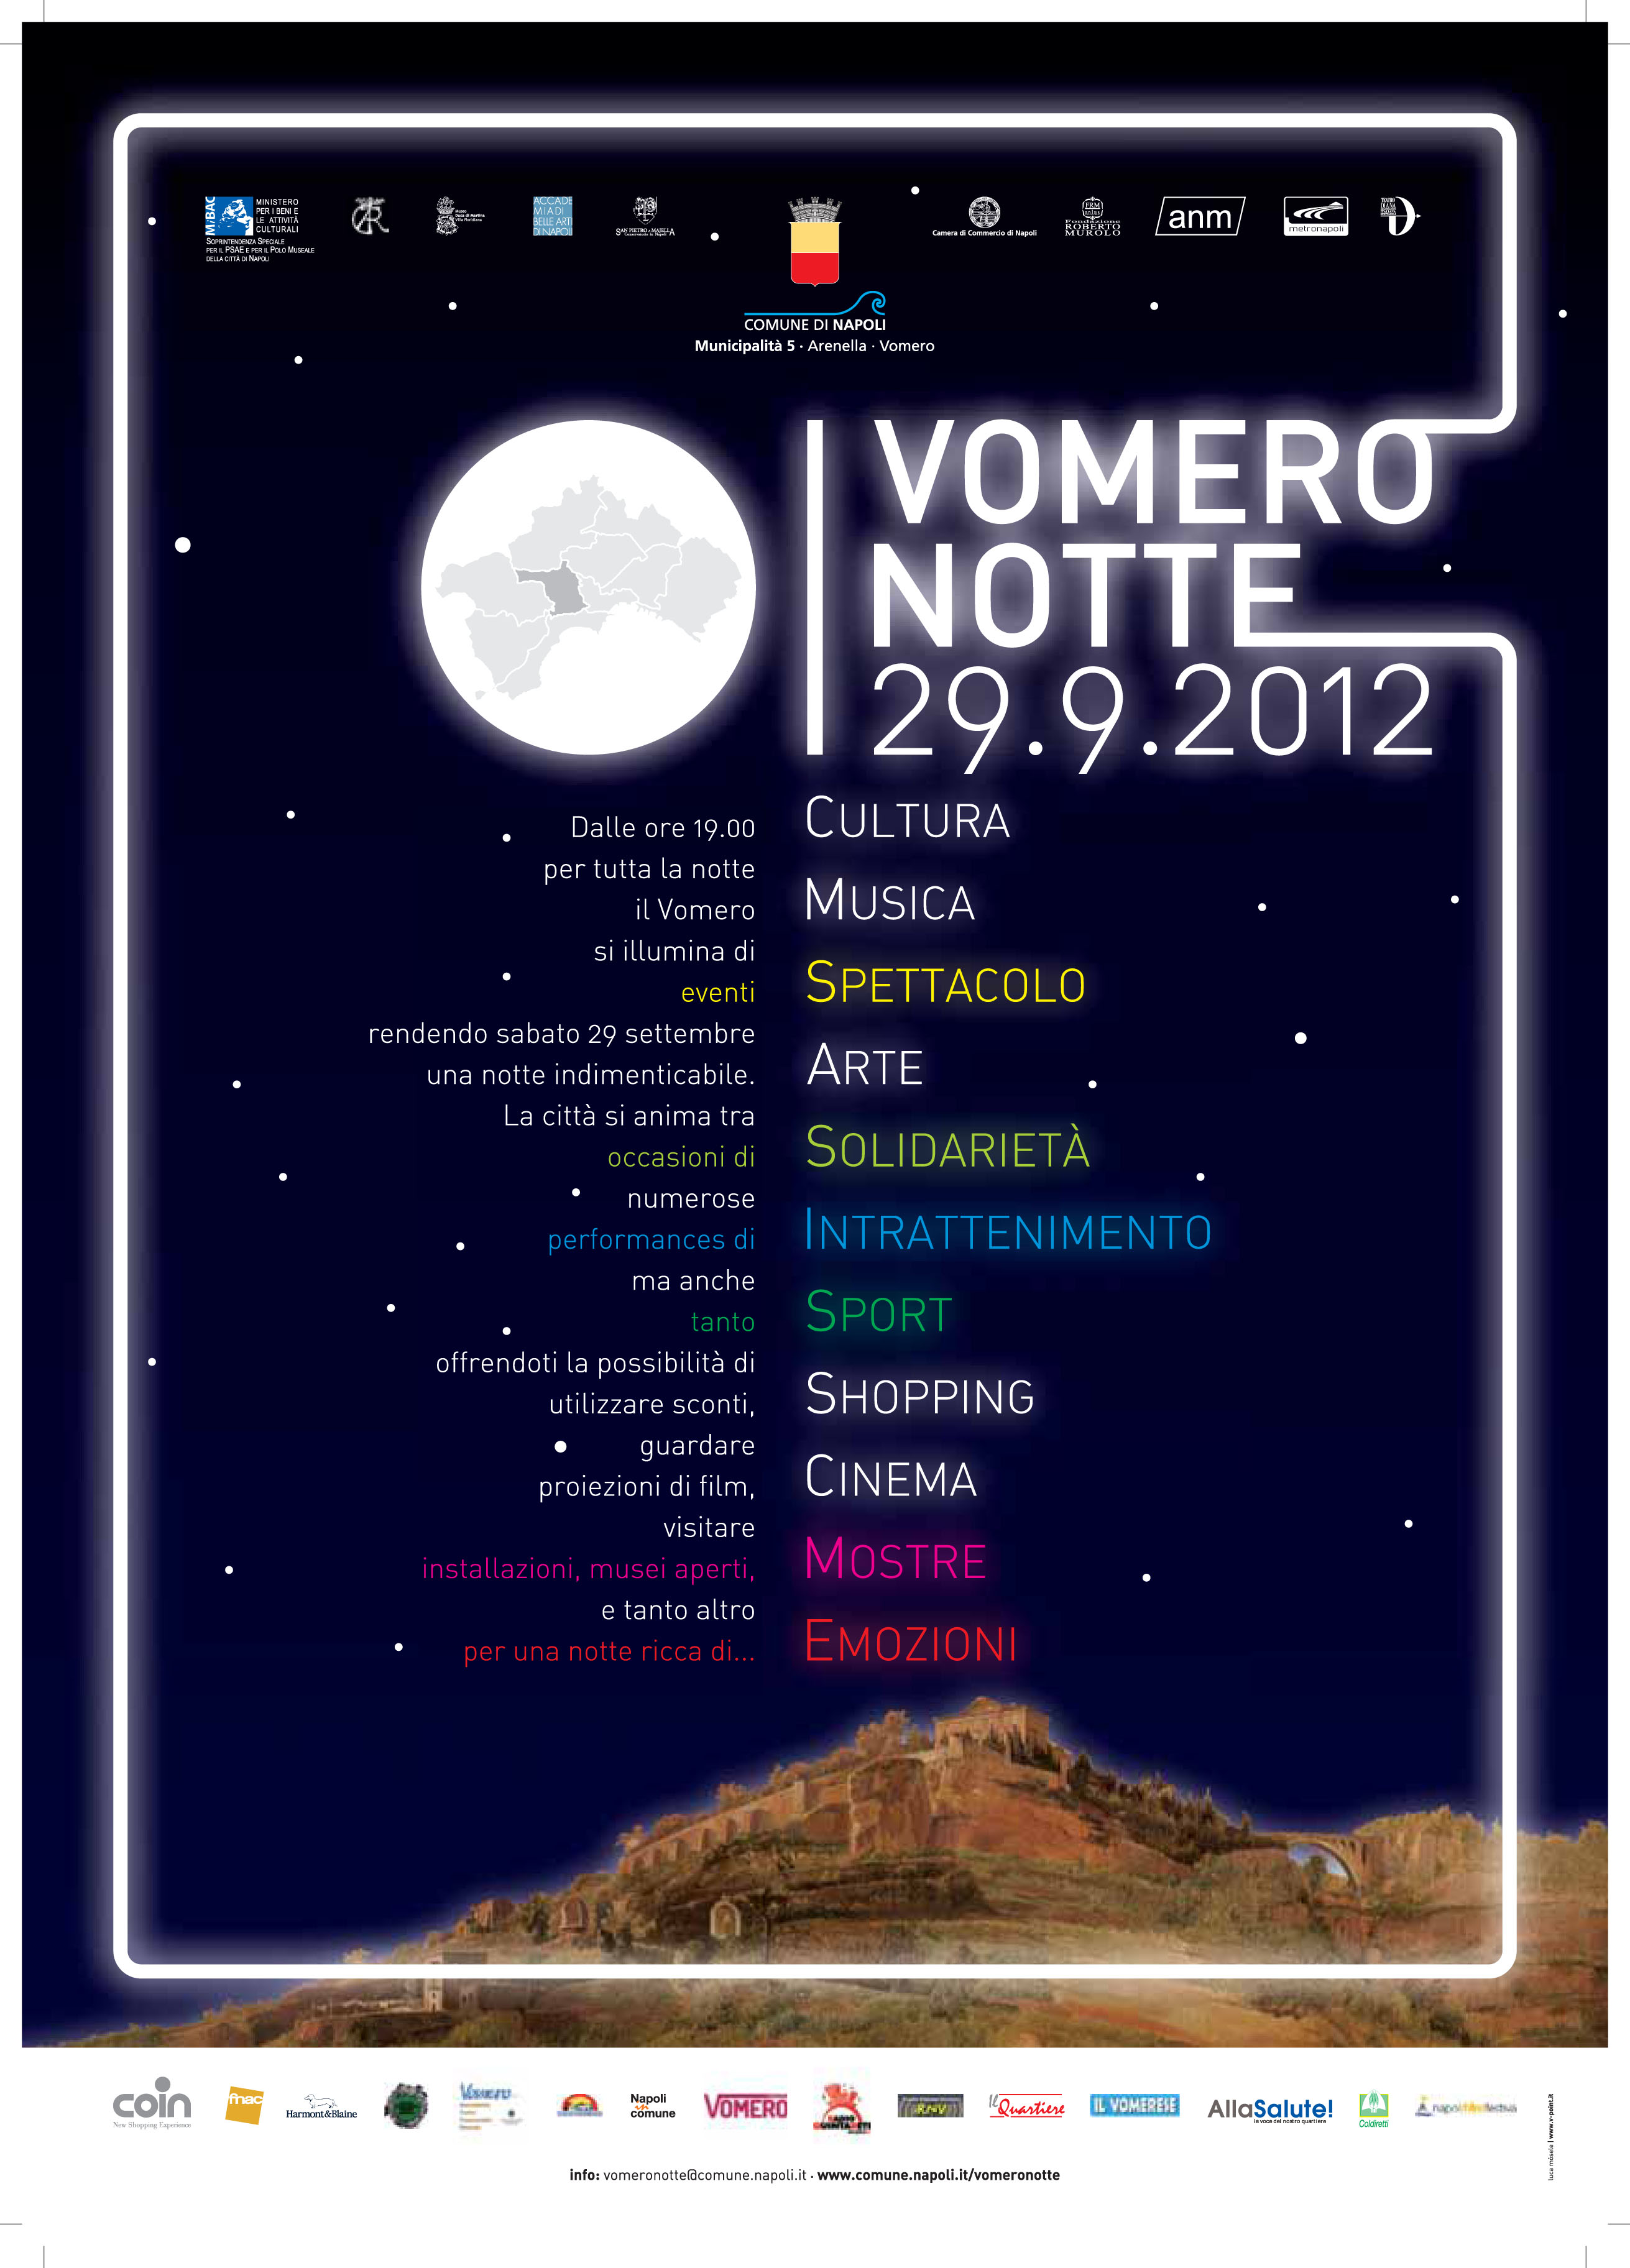 http://www.vomeronotte.it/wp-content/uploads/2012/09/locandina-vomero-notte.jpg